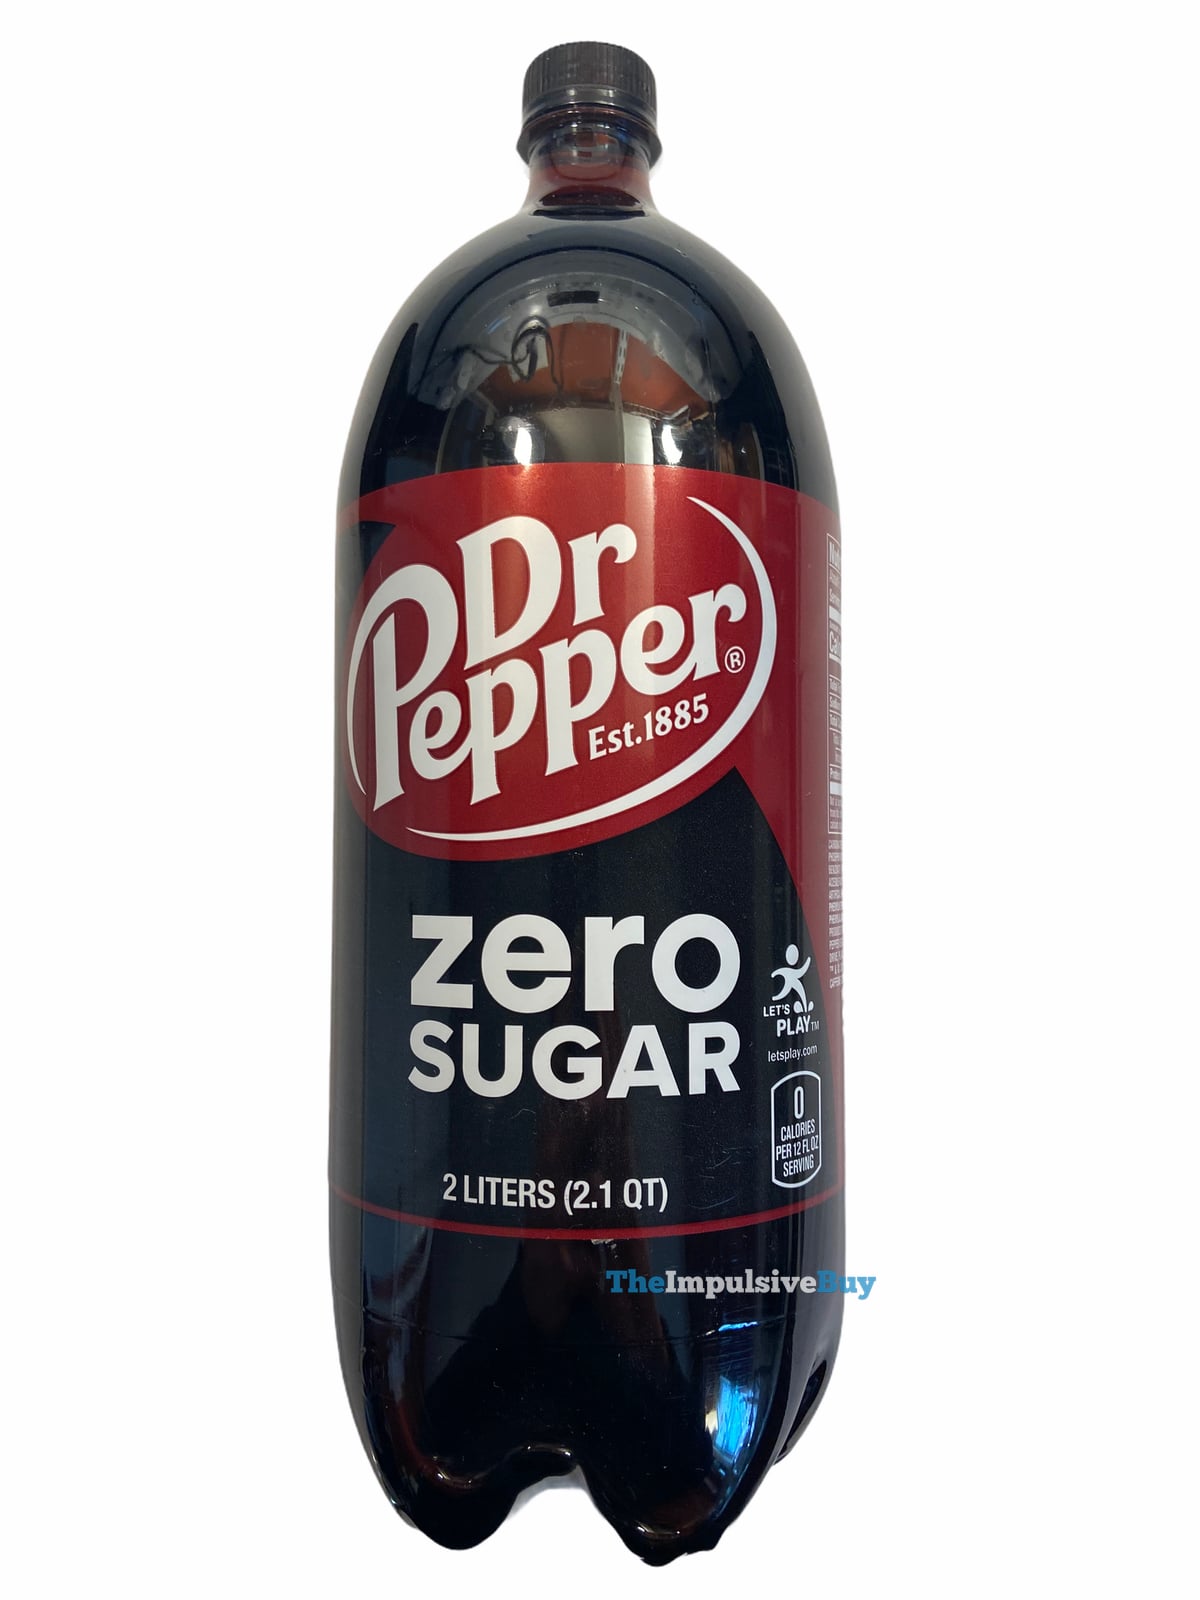 Dr Pepper Made with Sugar, 8 fl oz glass bottles, 6 pack 